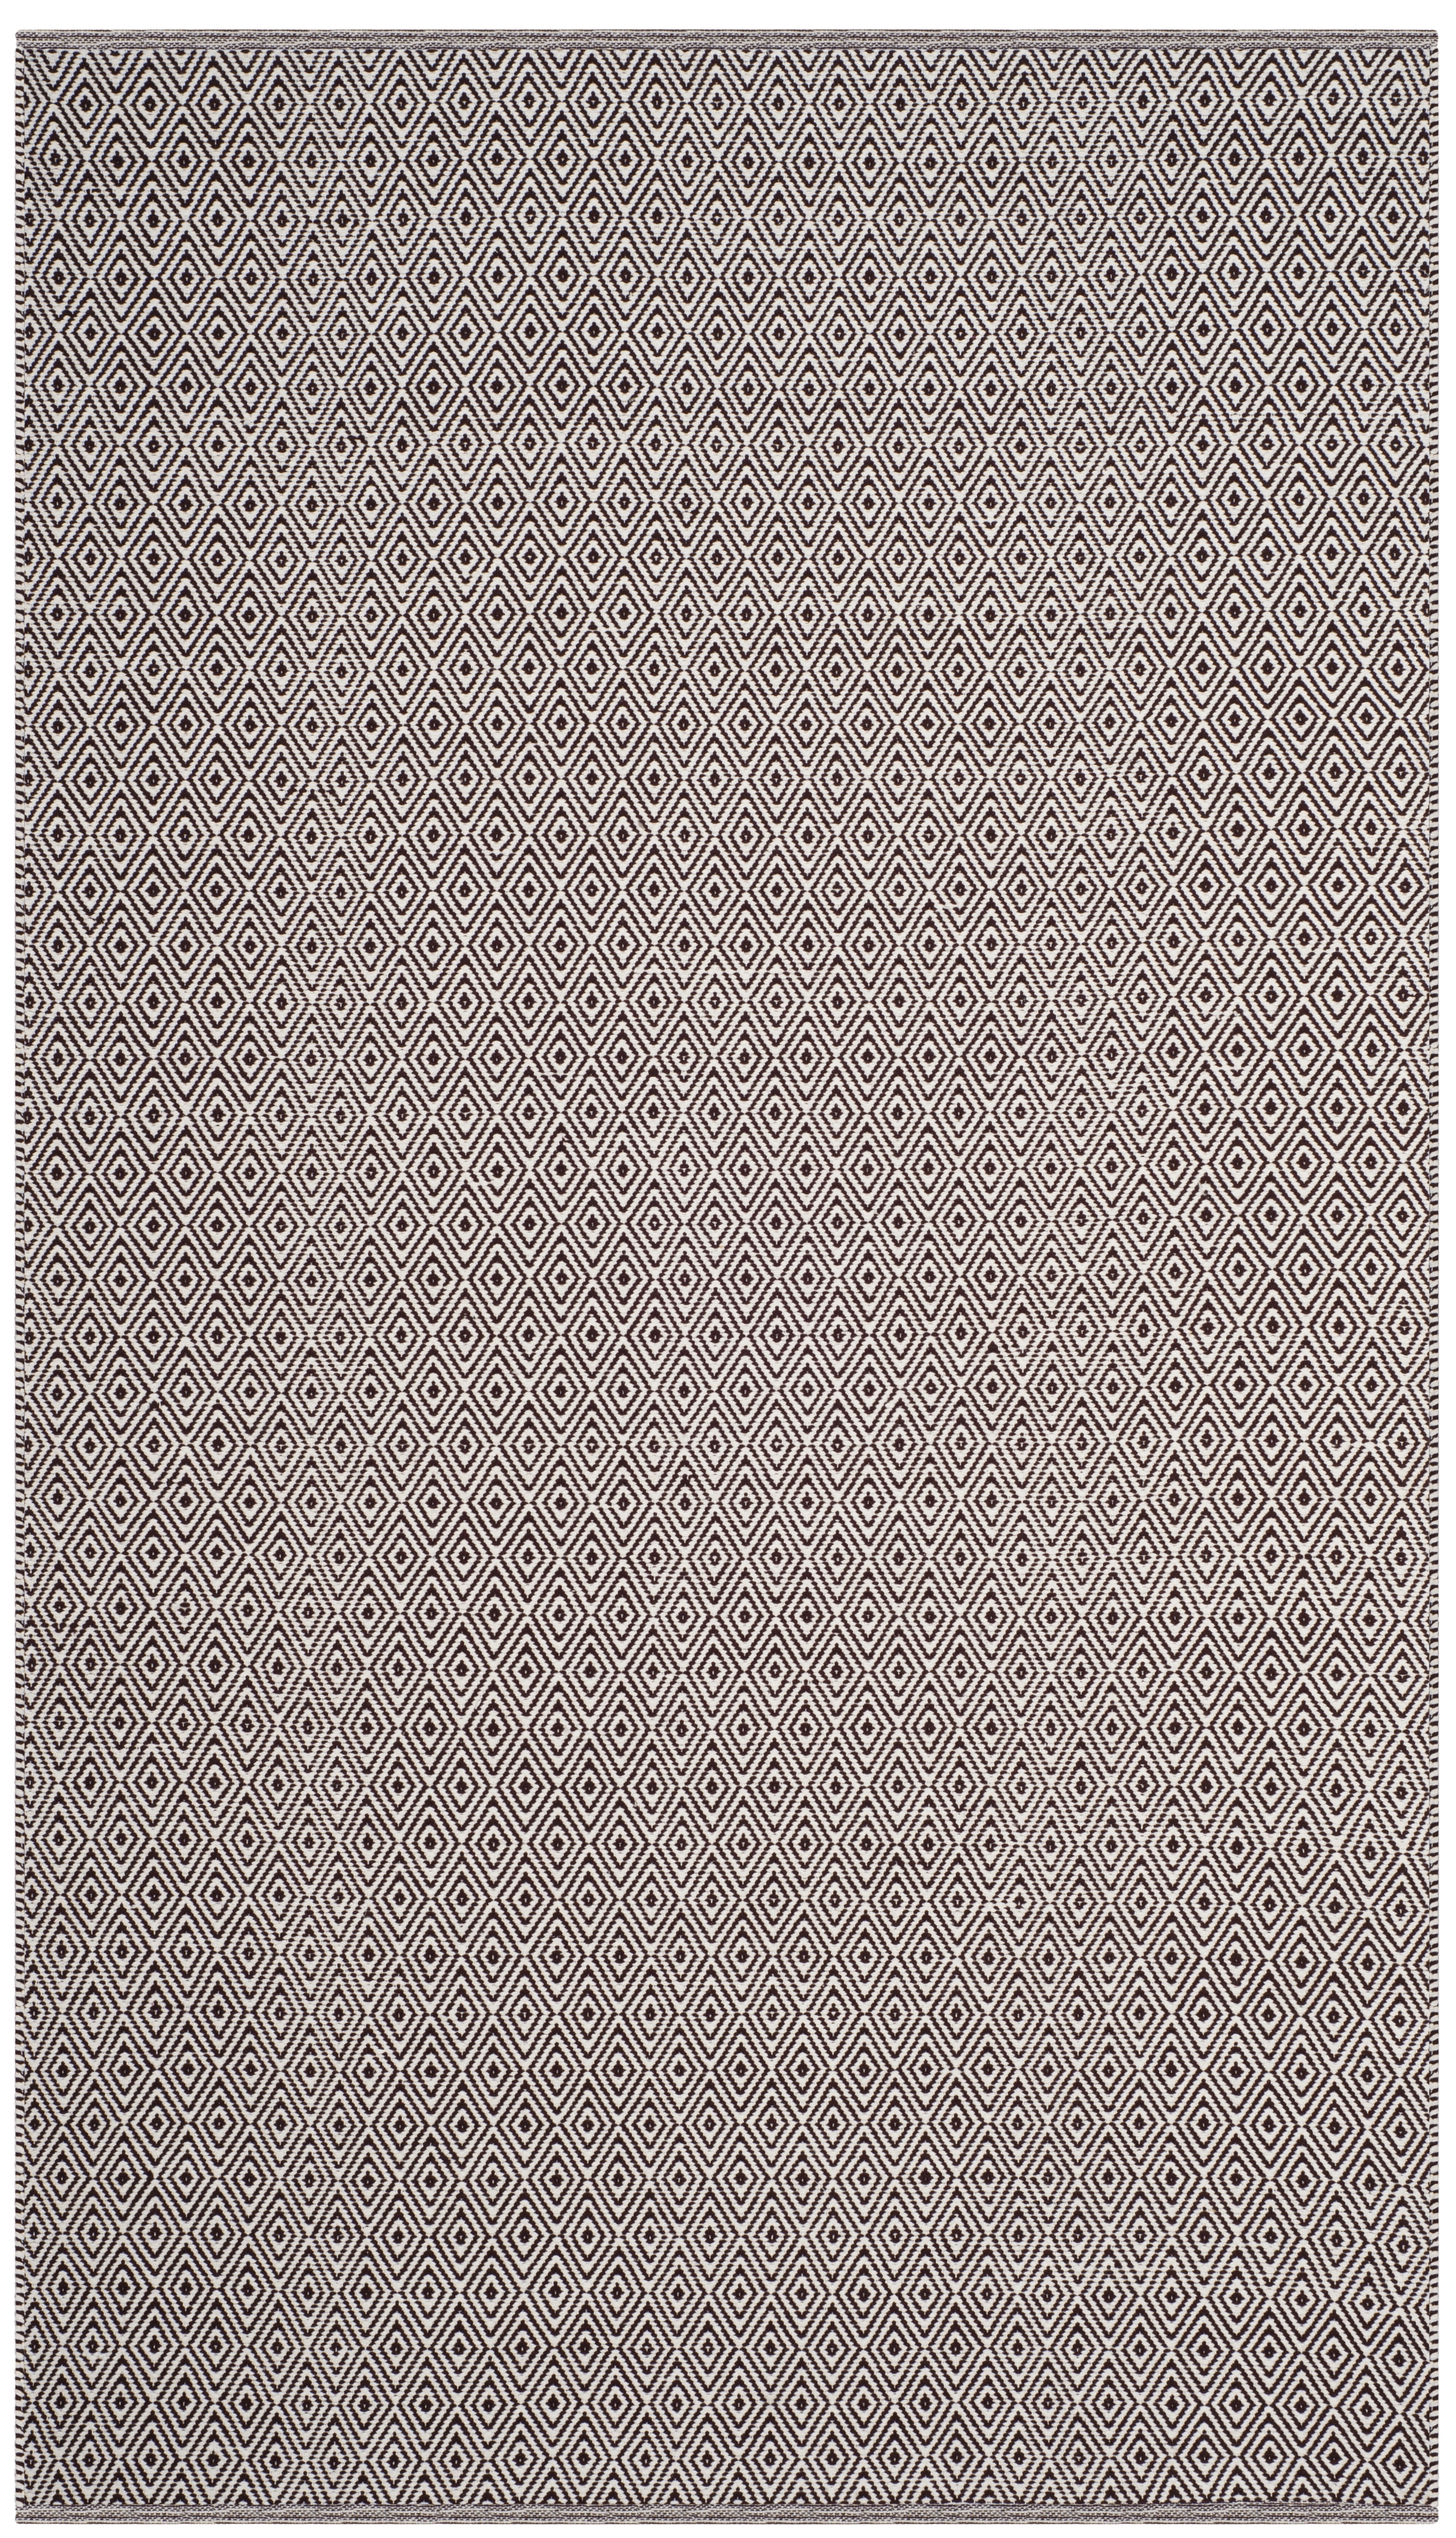 Arlo Home Hand Woven Area Rug, MTK515M, Ivory/Chocolate,  5' X 8' - Image 0